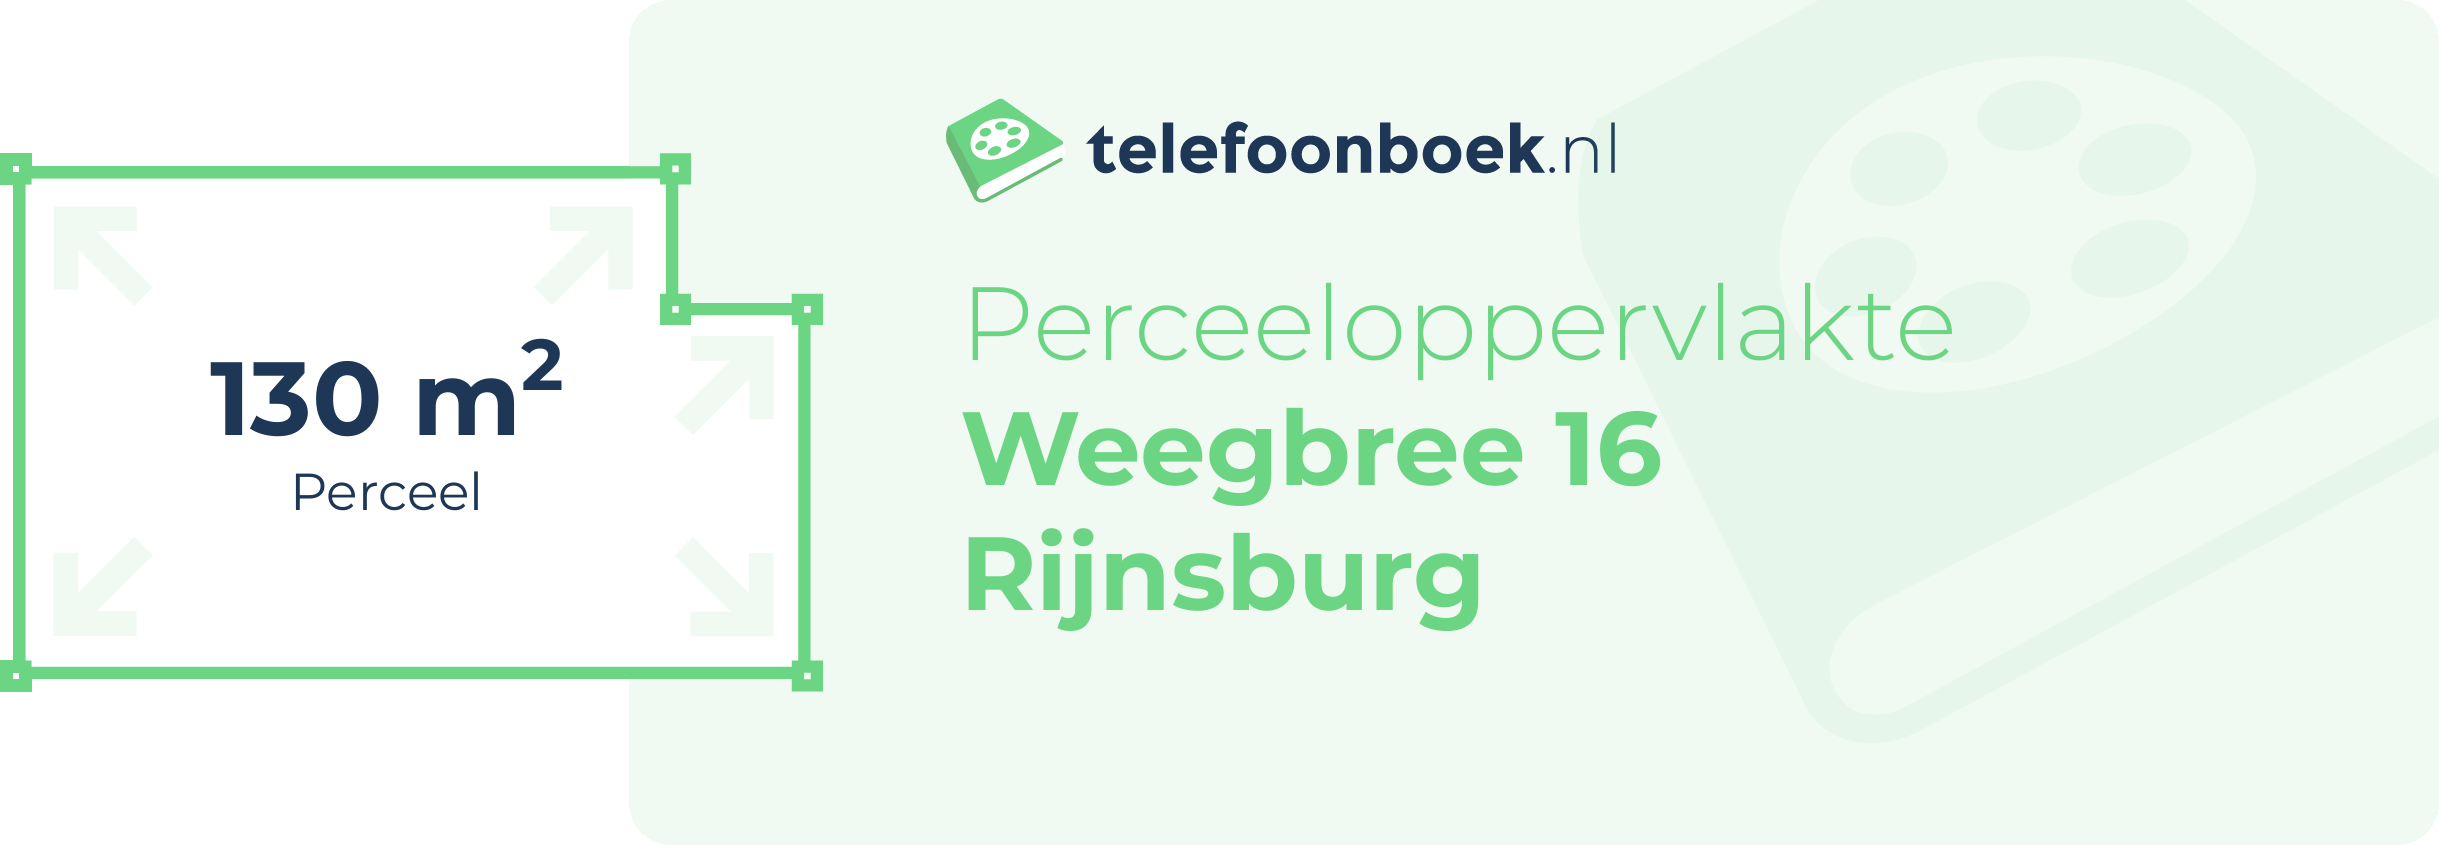 Perceeloppervlakte Weegbree 16 Rijnsburg